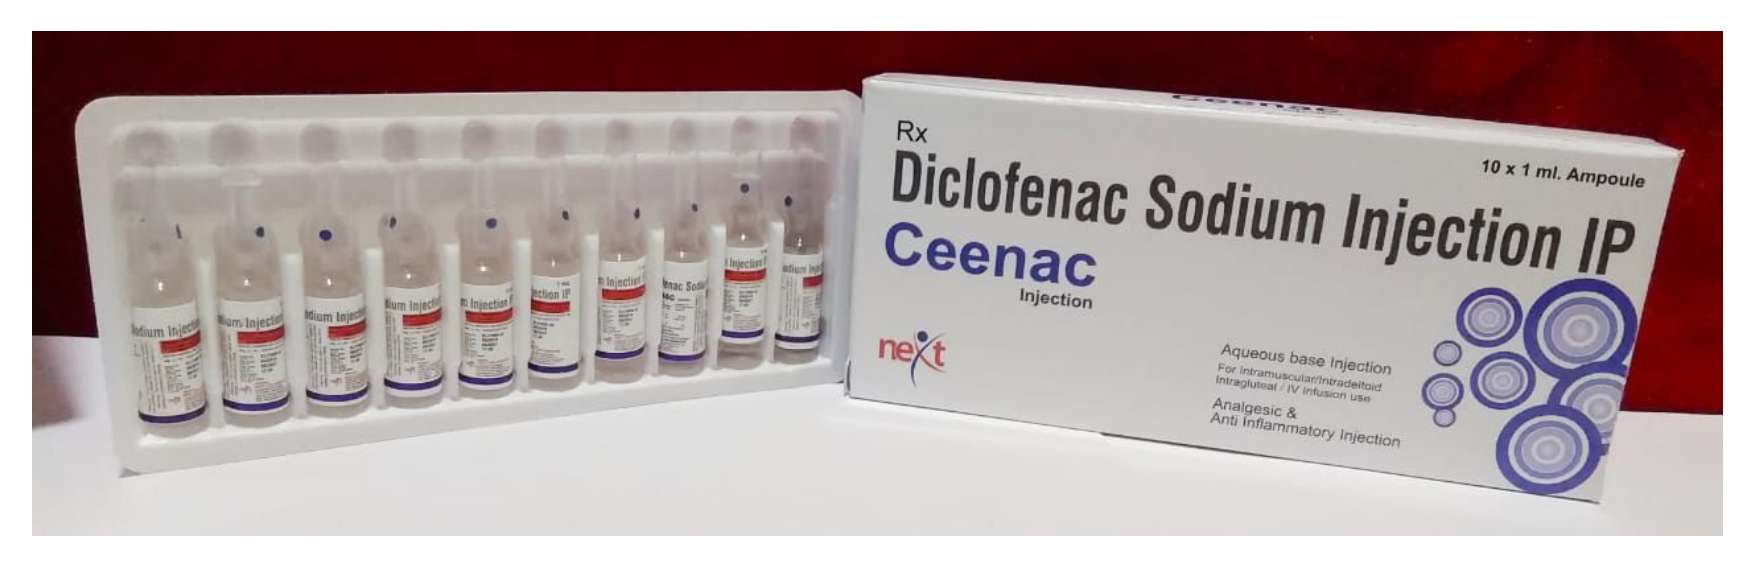 diclofenac sodium injection 1ml